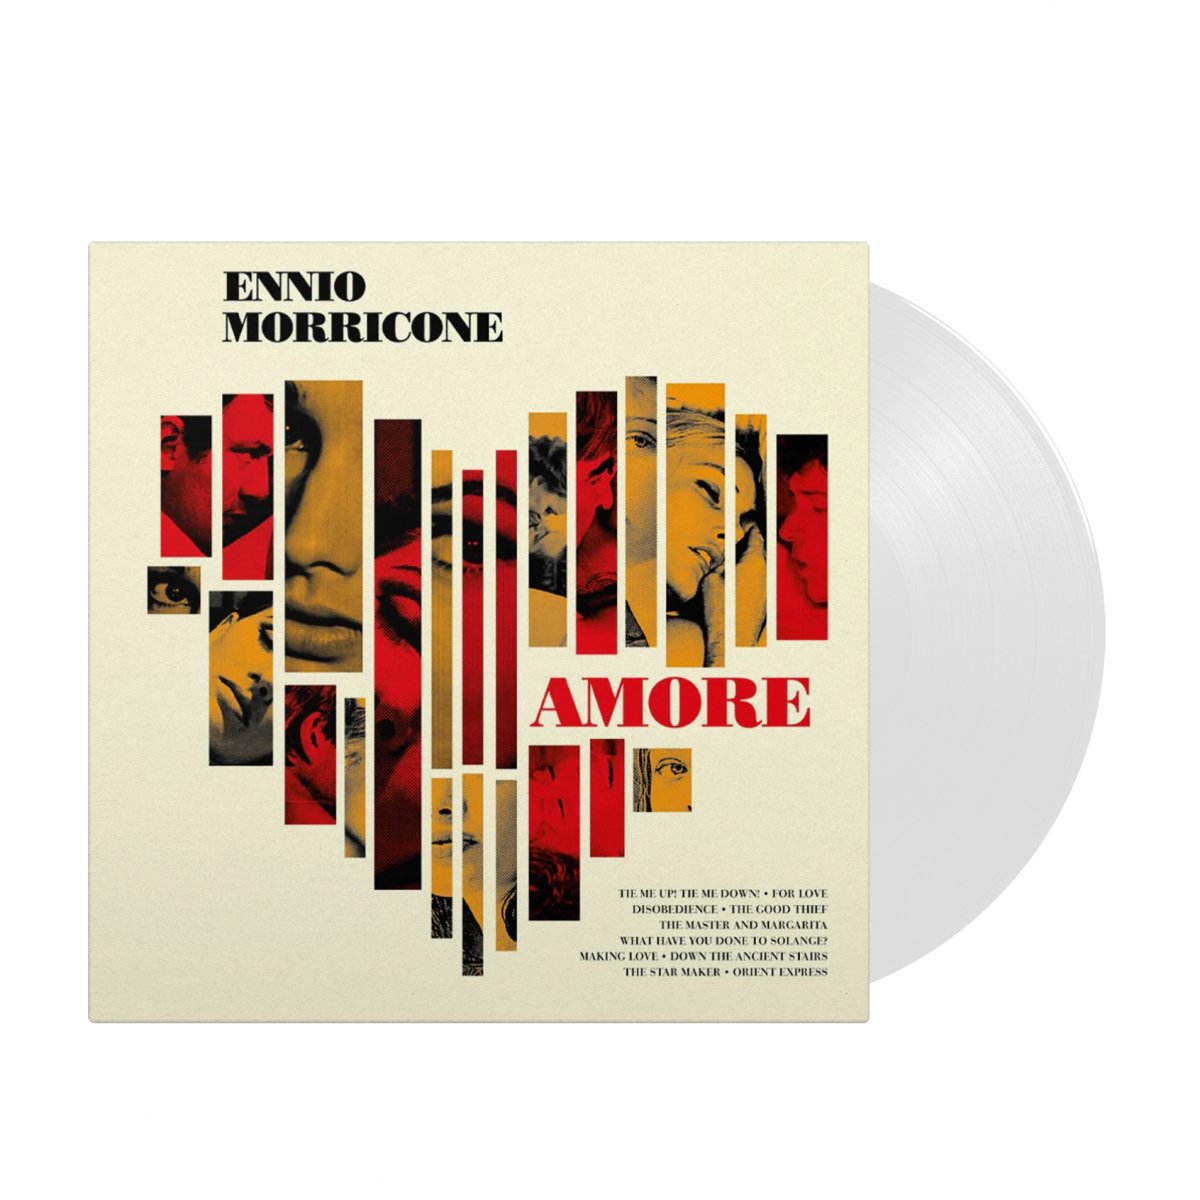 ENNIO MORRICONE - Amore - Inner Ocean Records